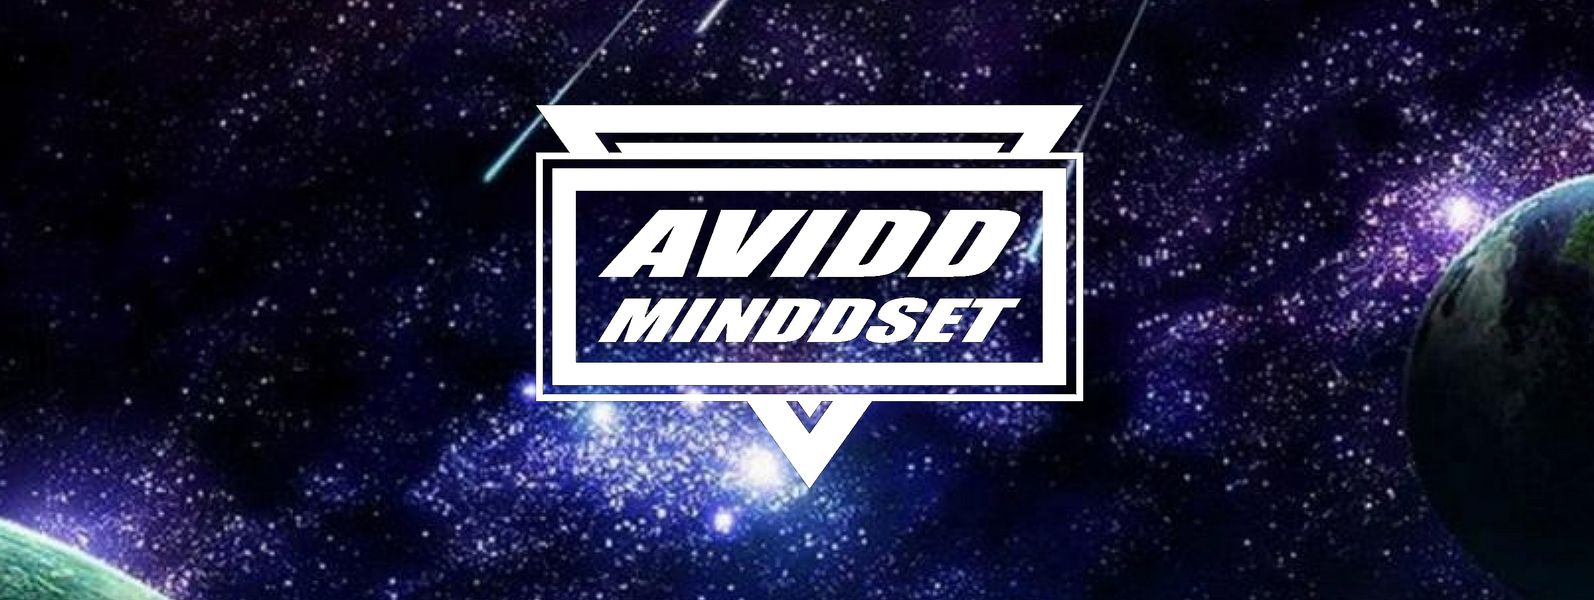 Avidd Minddset [DJ/Producer]